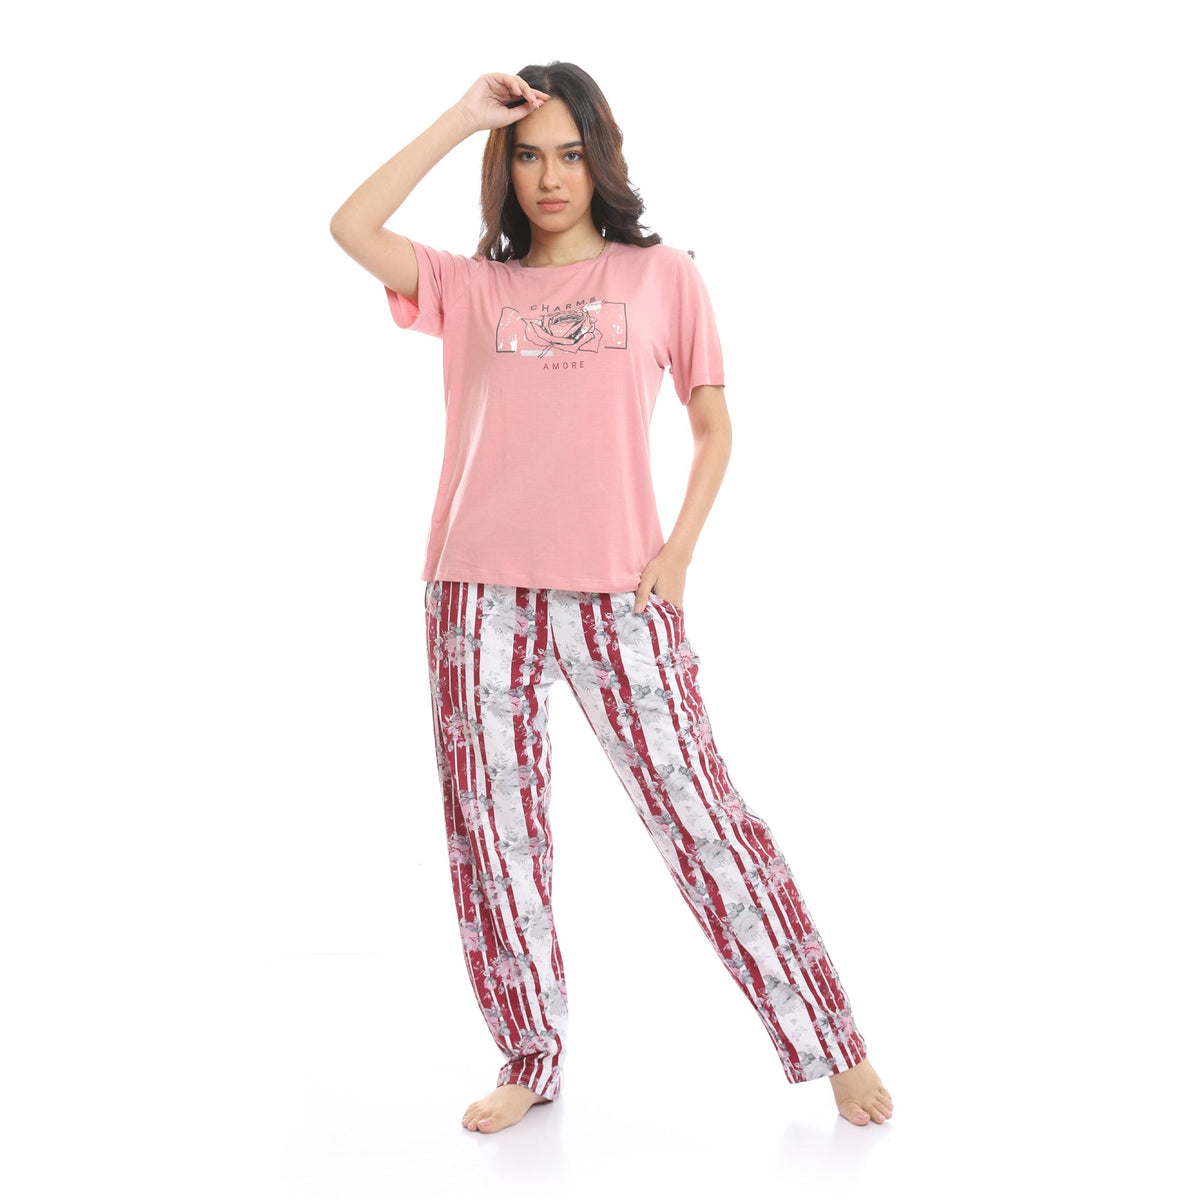 Red Cotton - Round Neck Tee & Patterned Pants Pajama Set - Pink & White